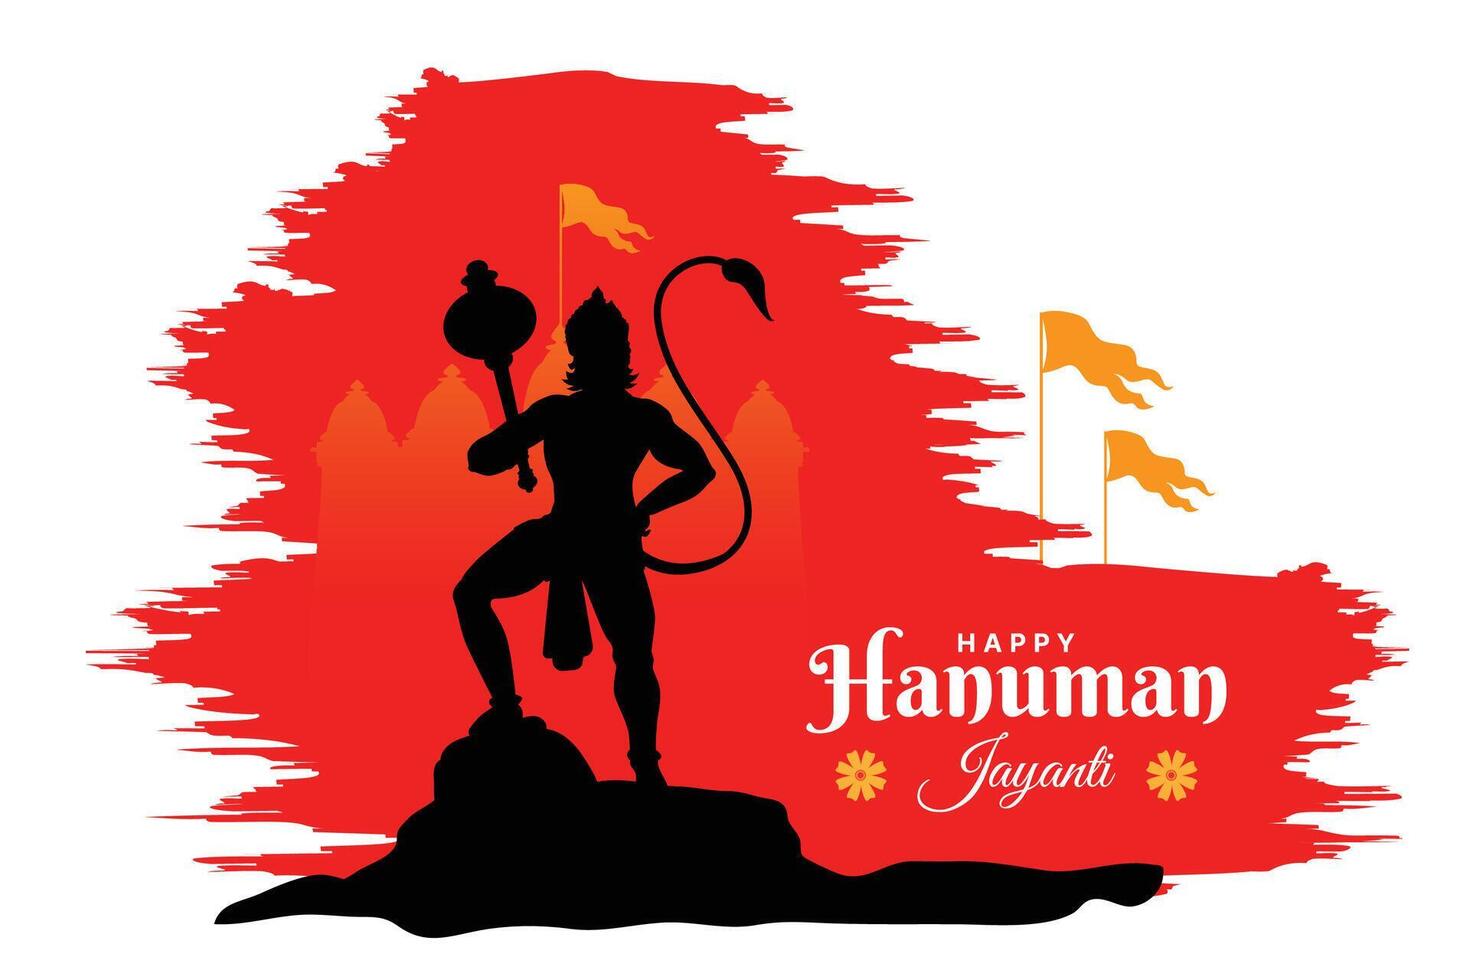 Happy Hanuman Jayanti festival, celebration of the birth of Lord Hanuman, greeting card post vector